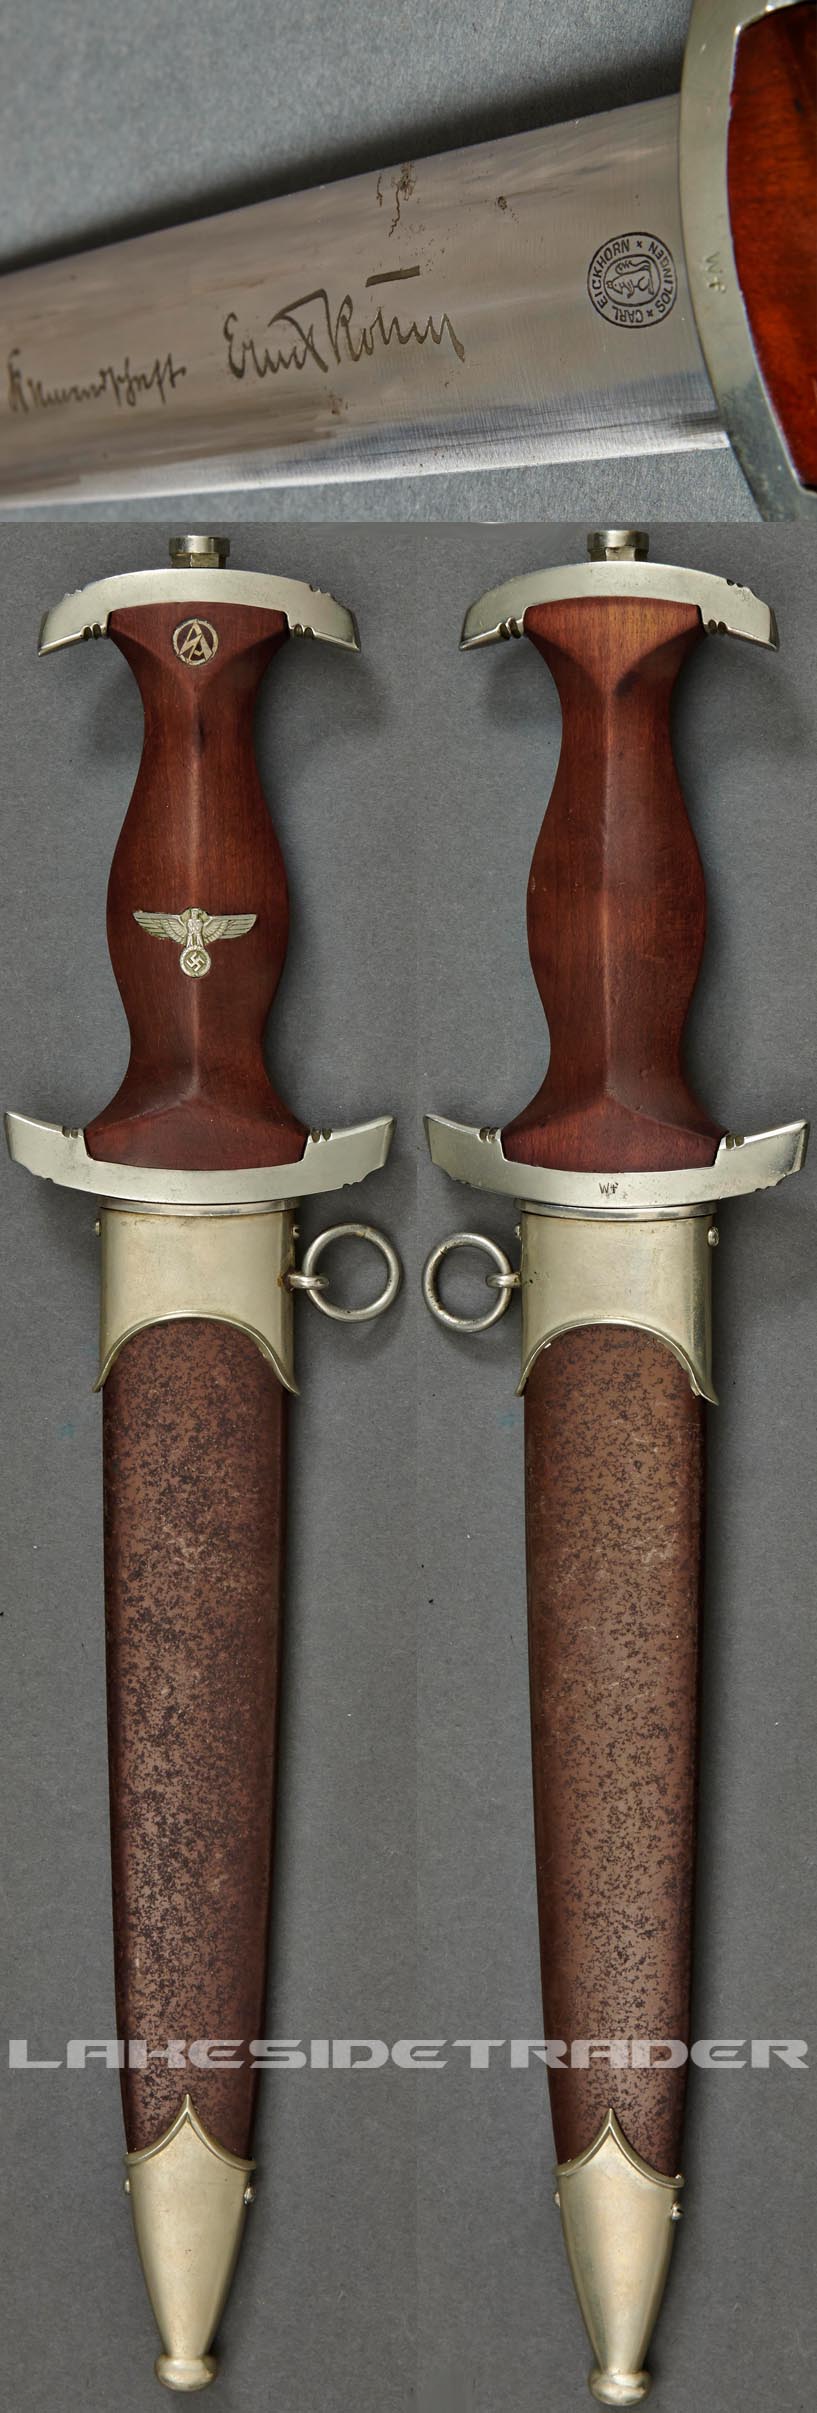 A model 1933 SA honour dagger with Ernst Rohm dedication